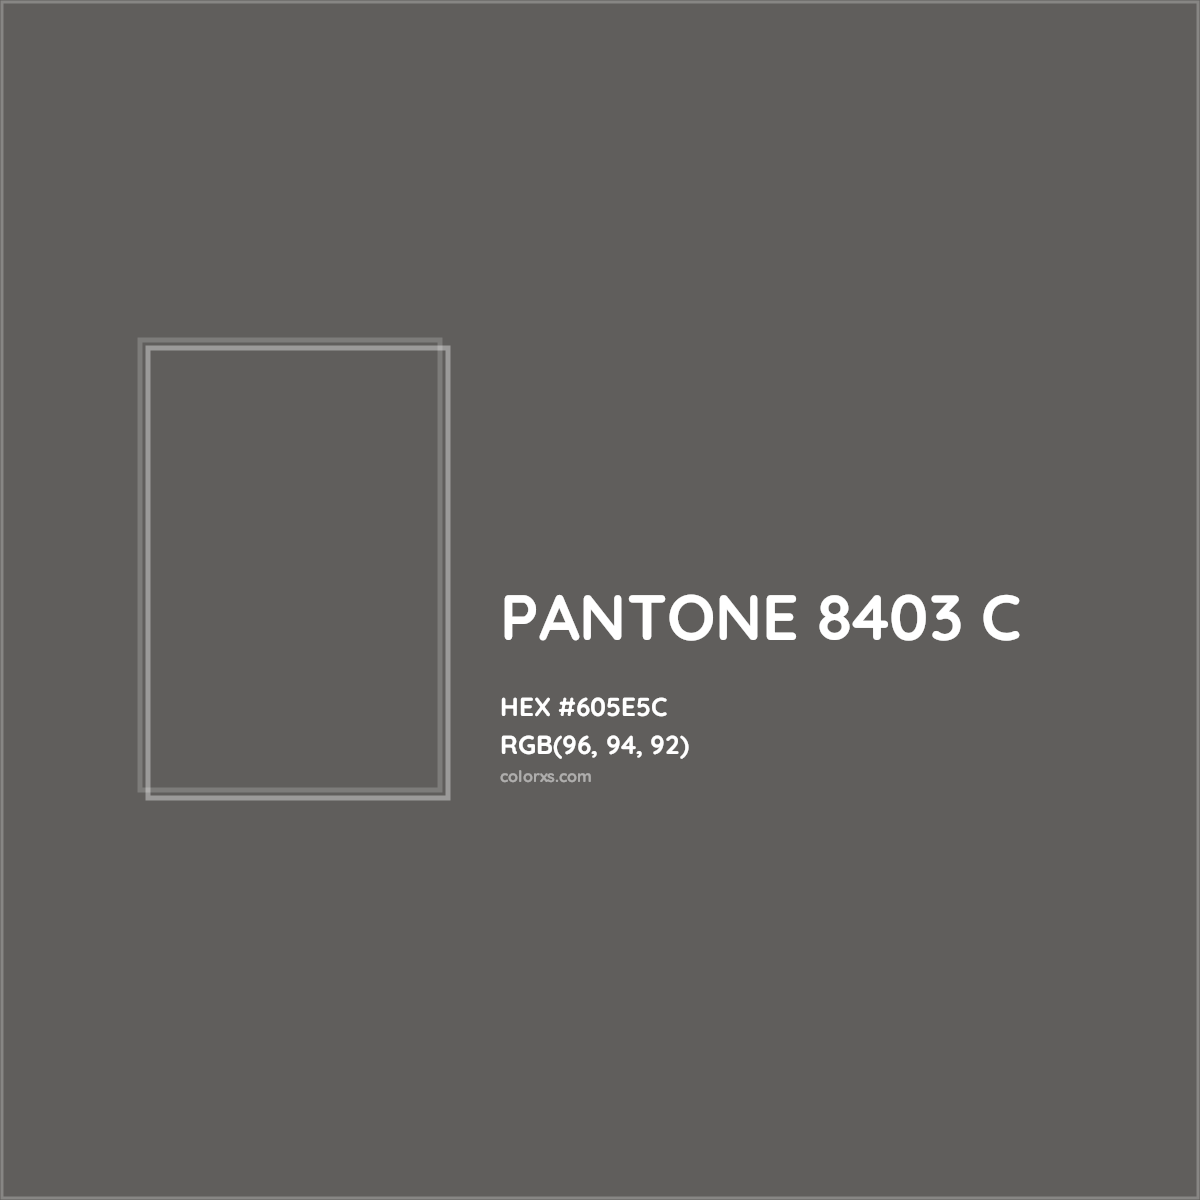 HEX #605E5C PANTONE 8403 C CMS Pantone PMS - Color Code